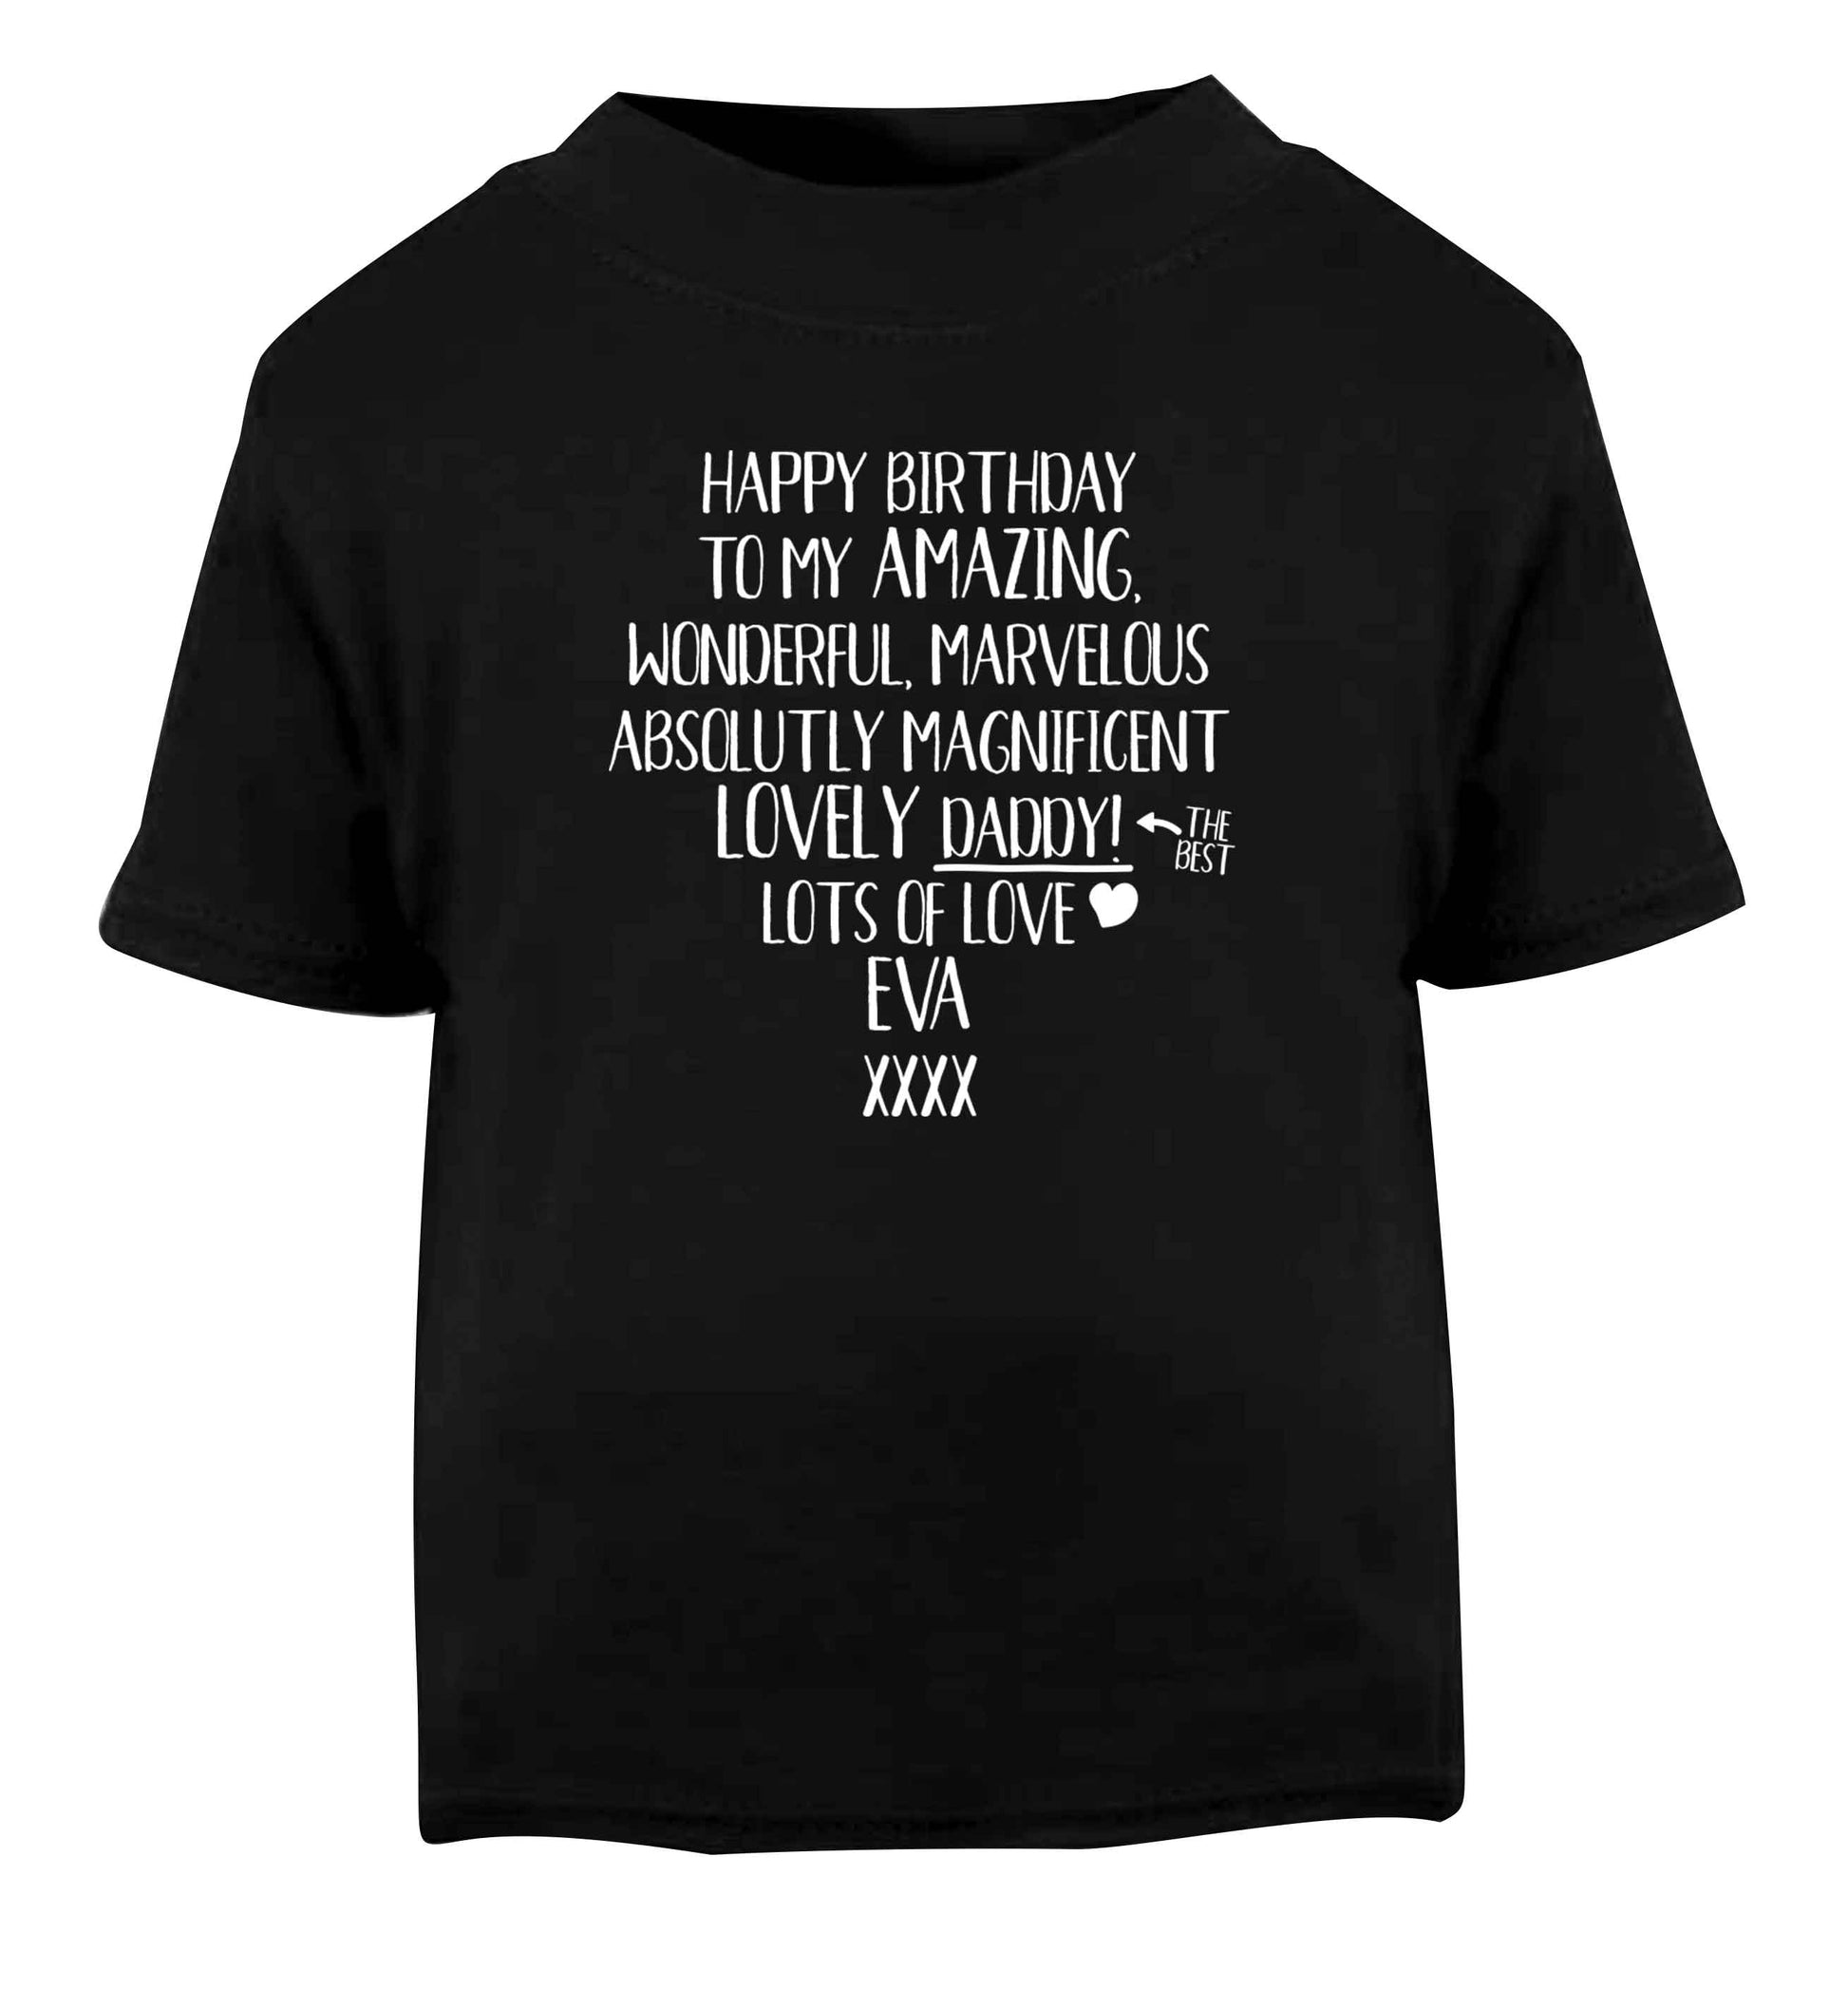 Personalised happy birthday to my amazing, wonderful, lovely daddy Black Baby Toddler Tshirt 2 years